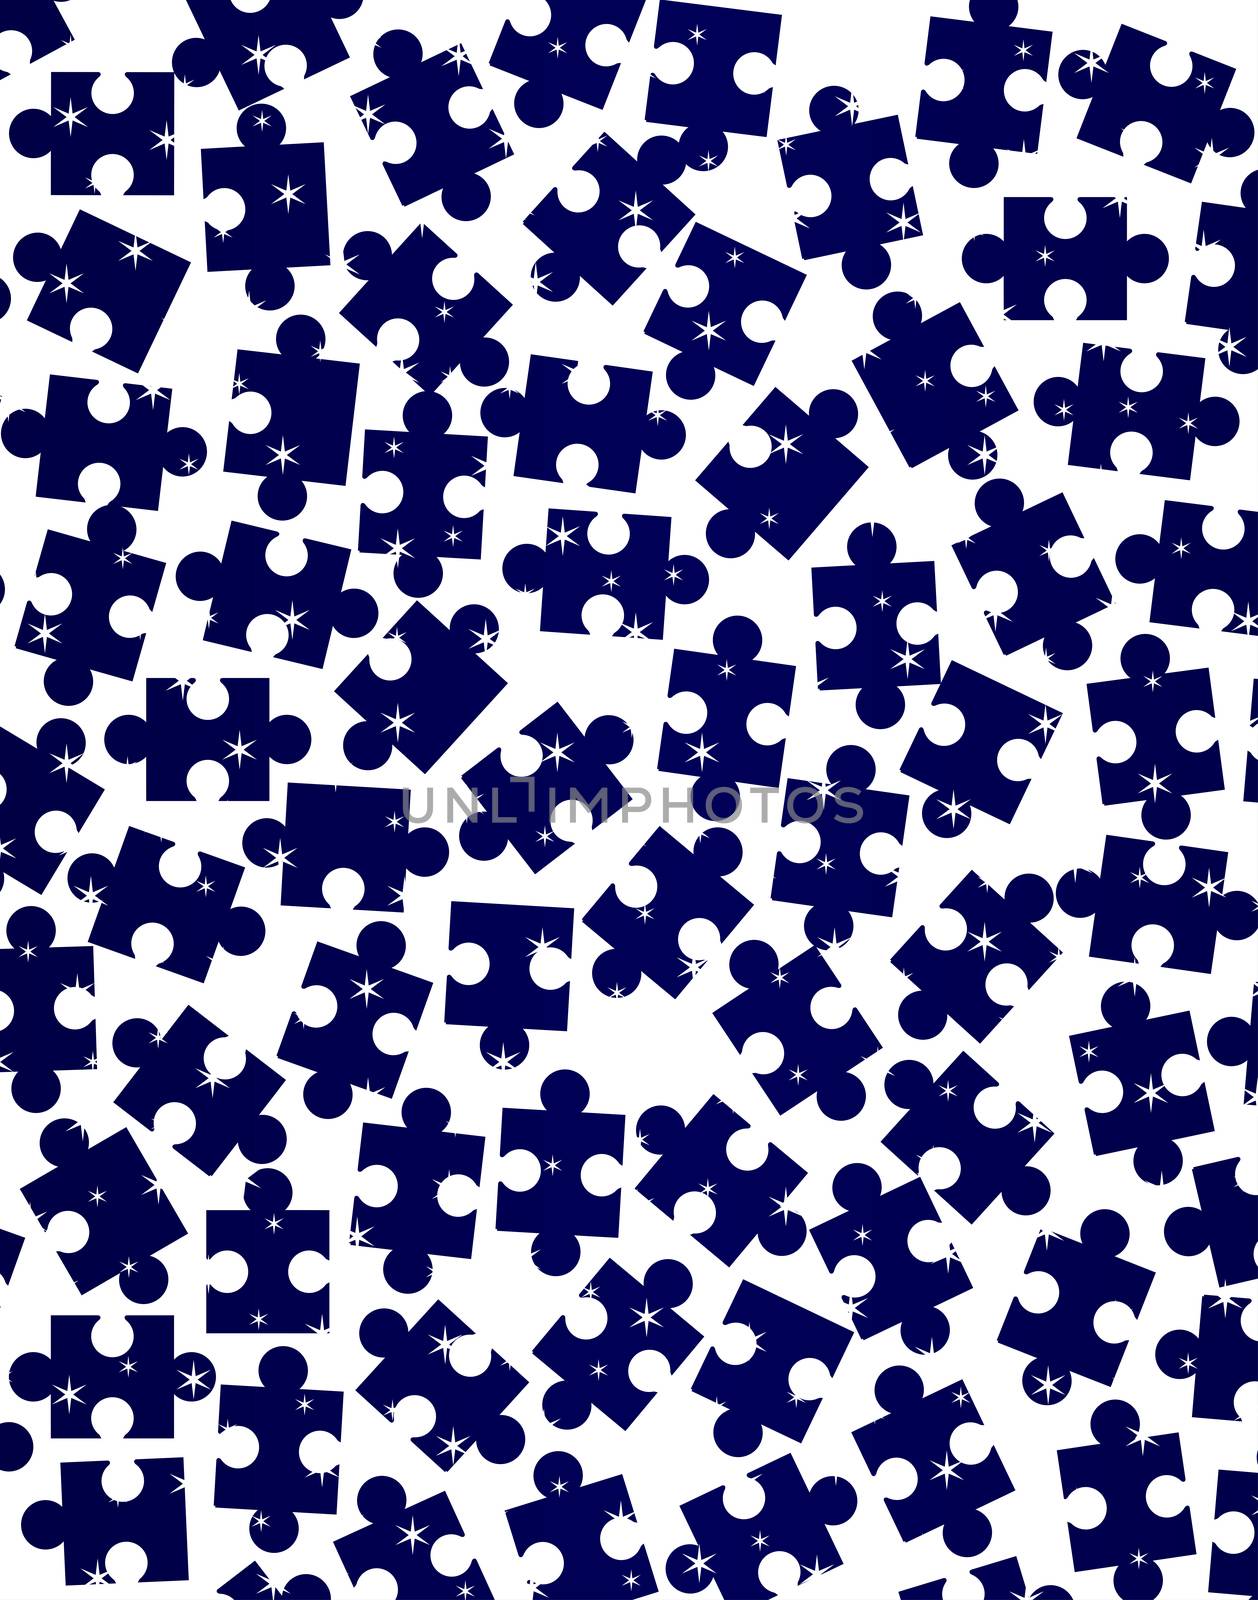 Random dark jigsaw pieces over a light background